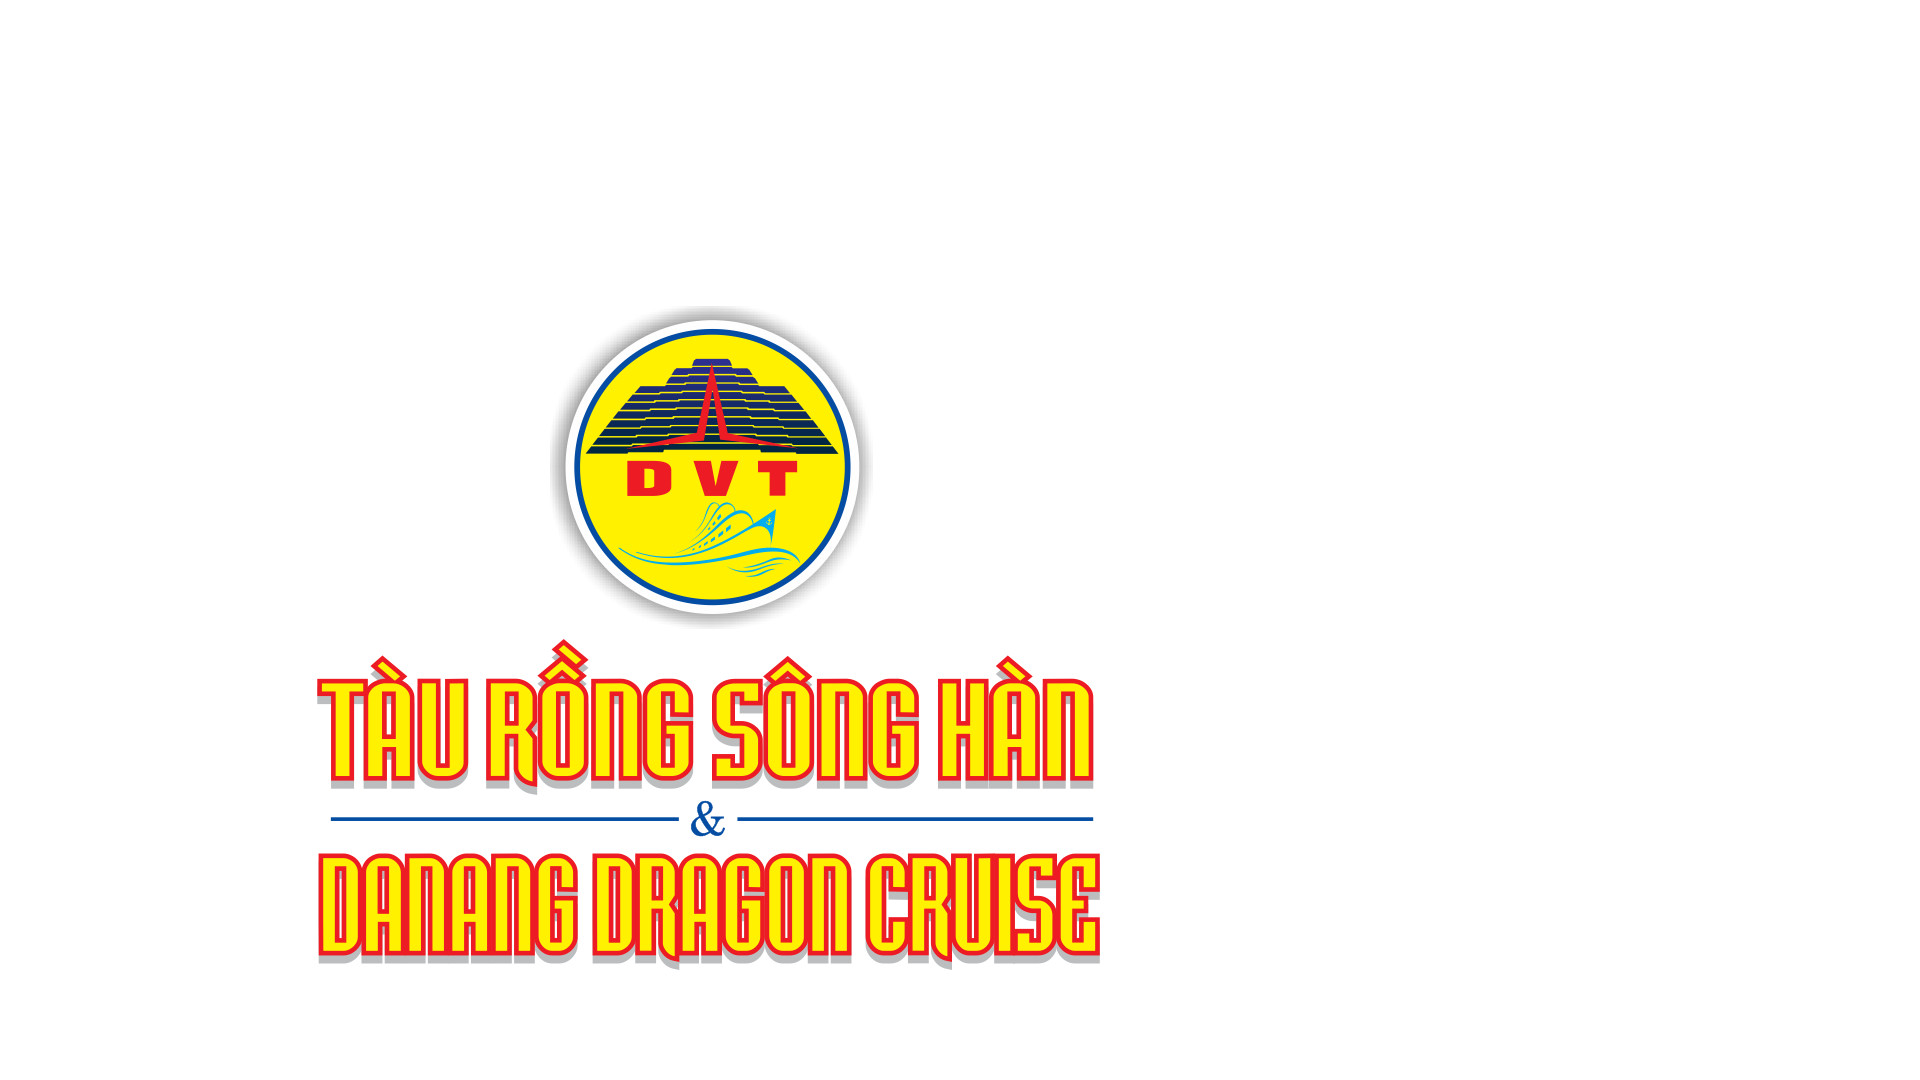 Danang Dragon Cruise